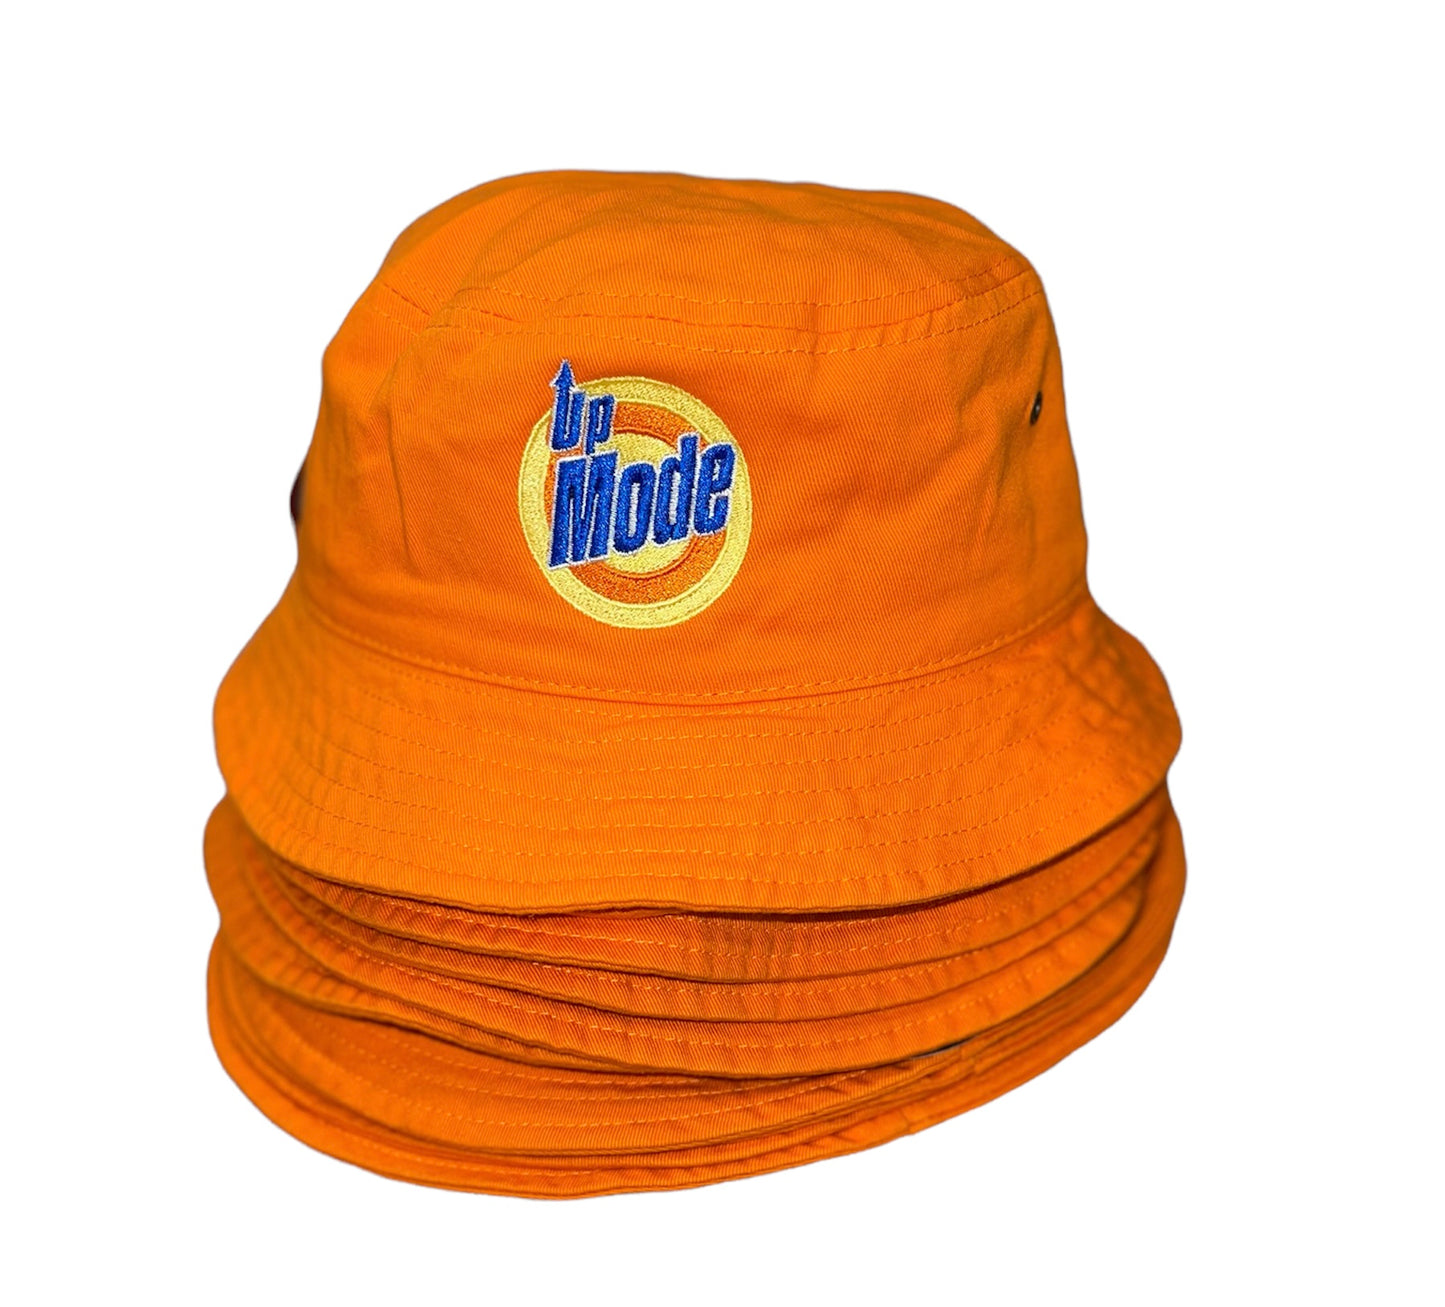 Up Mode Bucket Hat